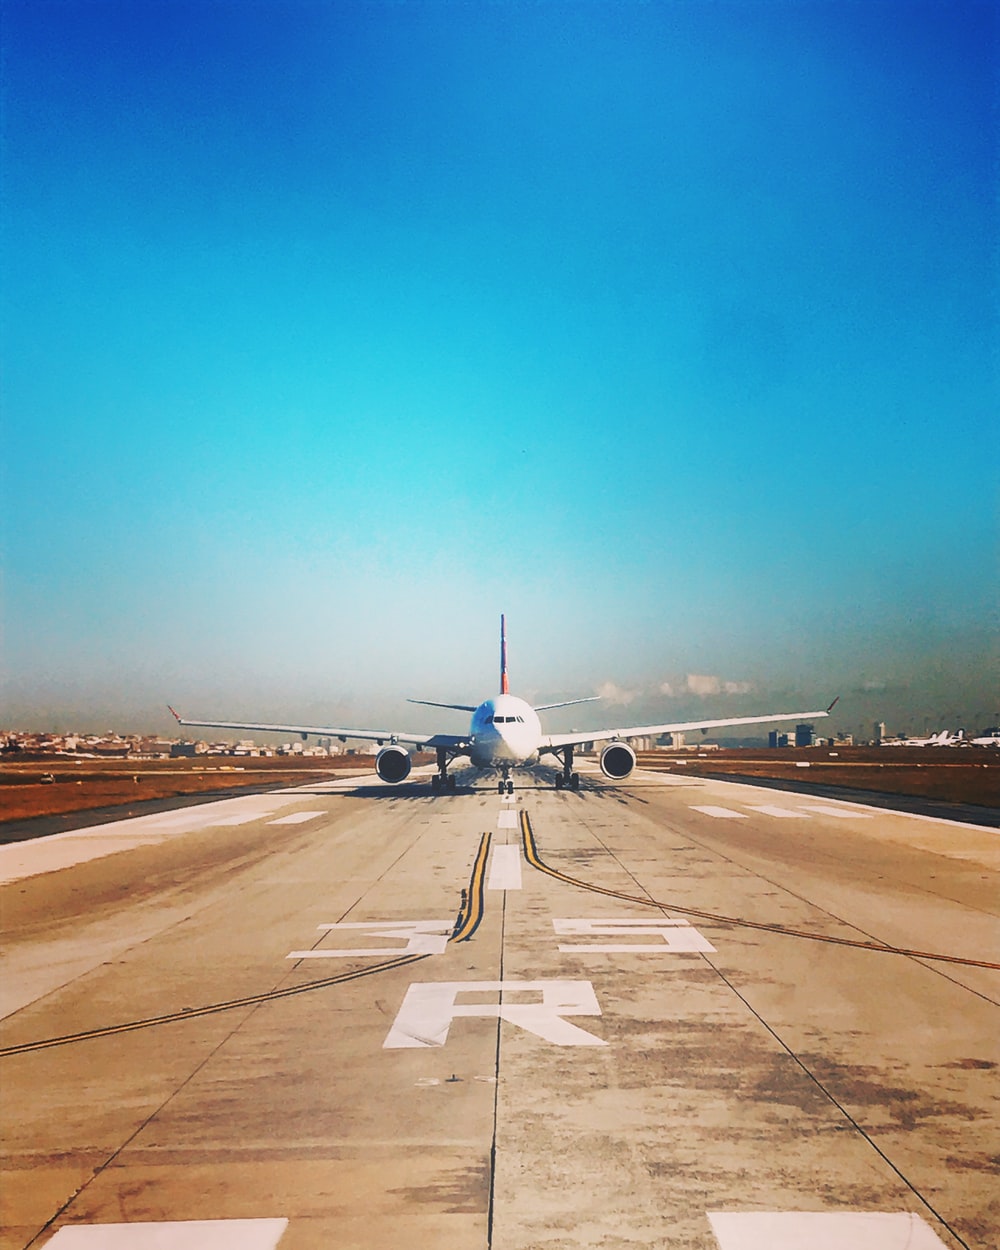 Airplane Landing Picture. Download Free Image